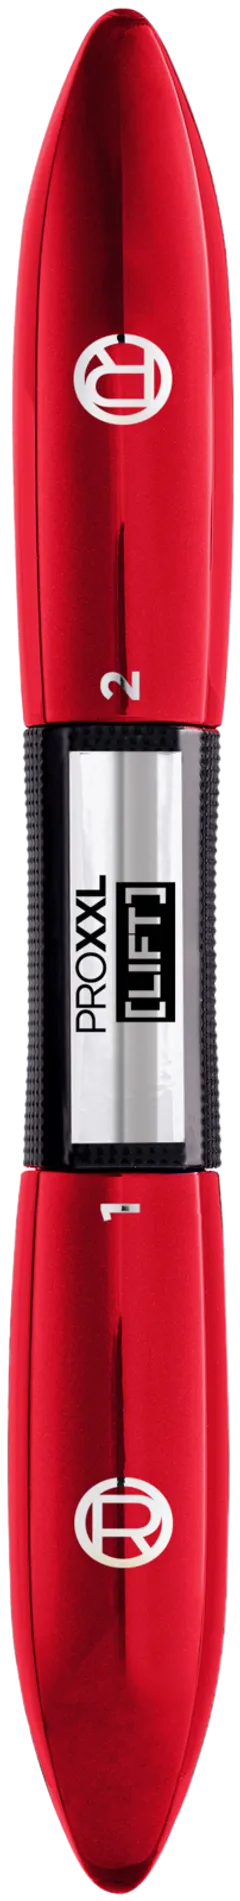 L'Oréal Paris Pro XXL Lift musta maskara 12ml - 1